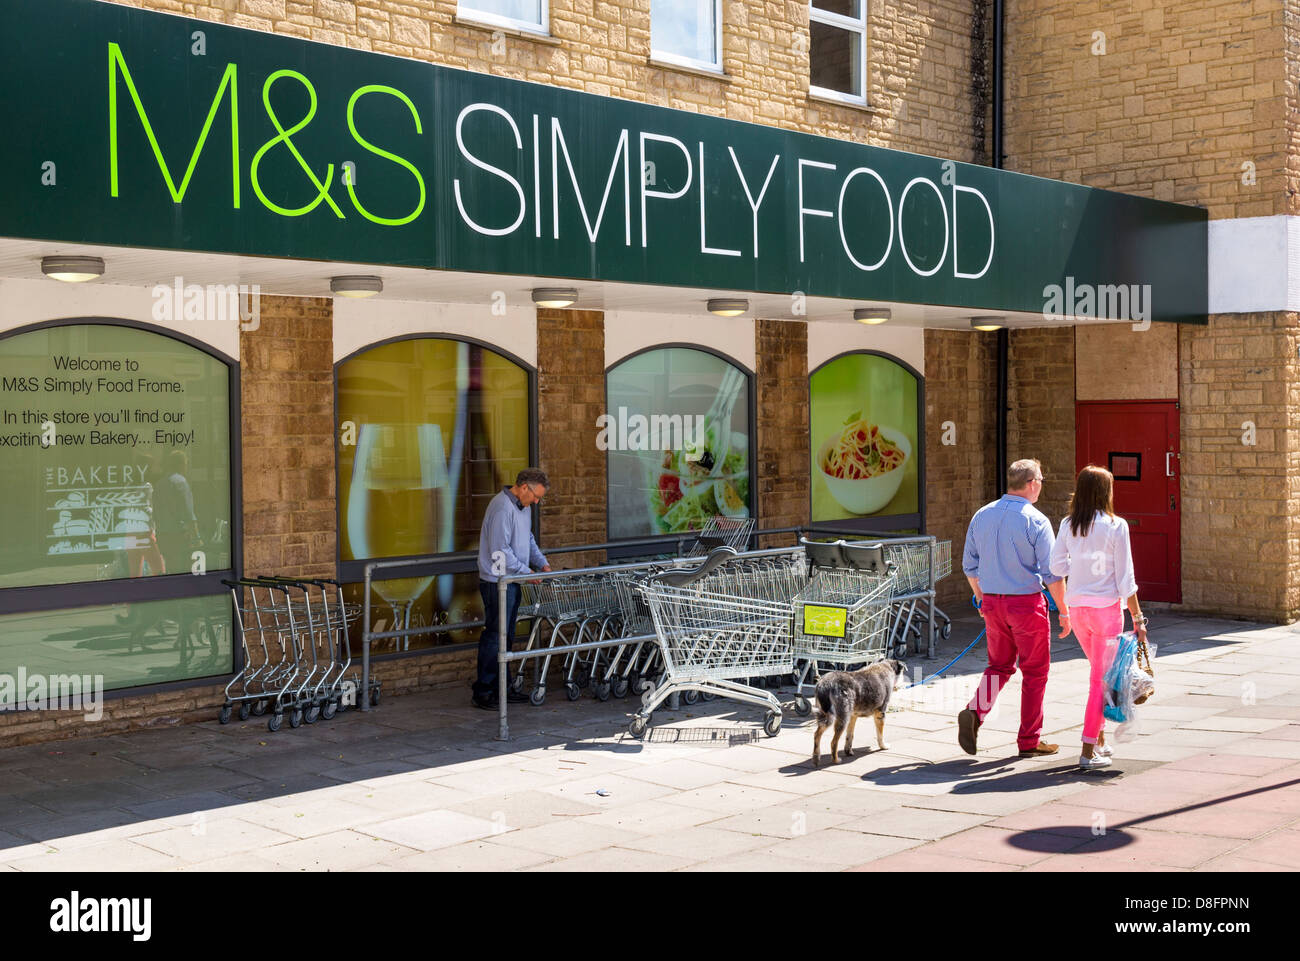 Avant de Marks & Spencer Simply Food store, UK Banque D'Images